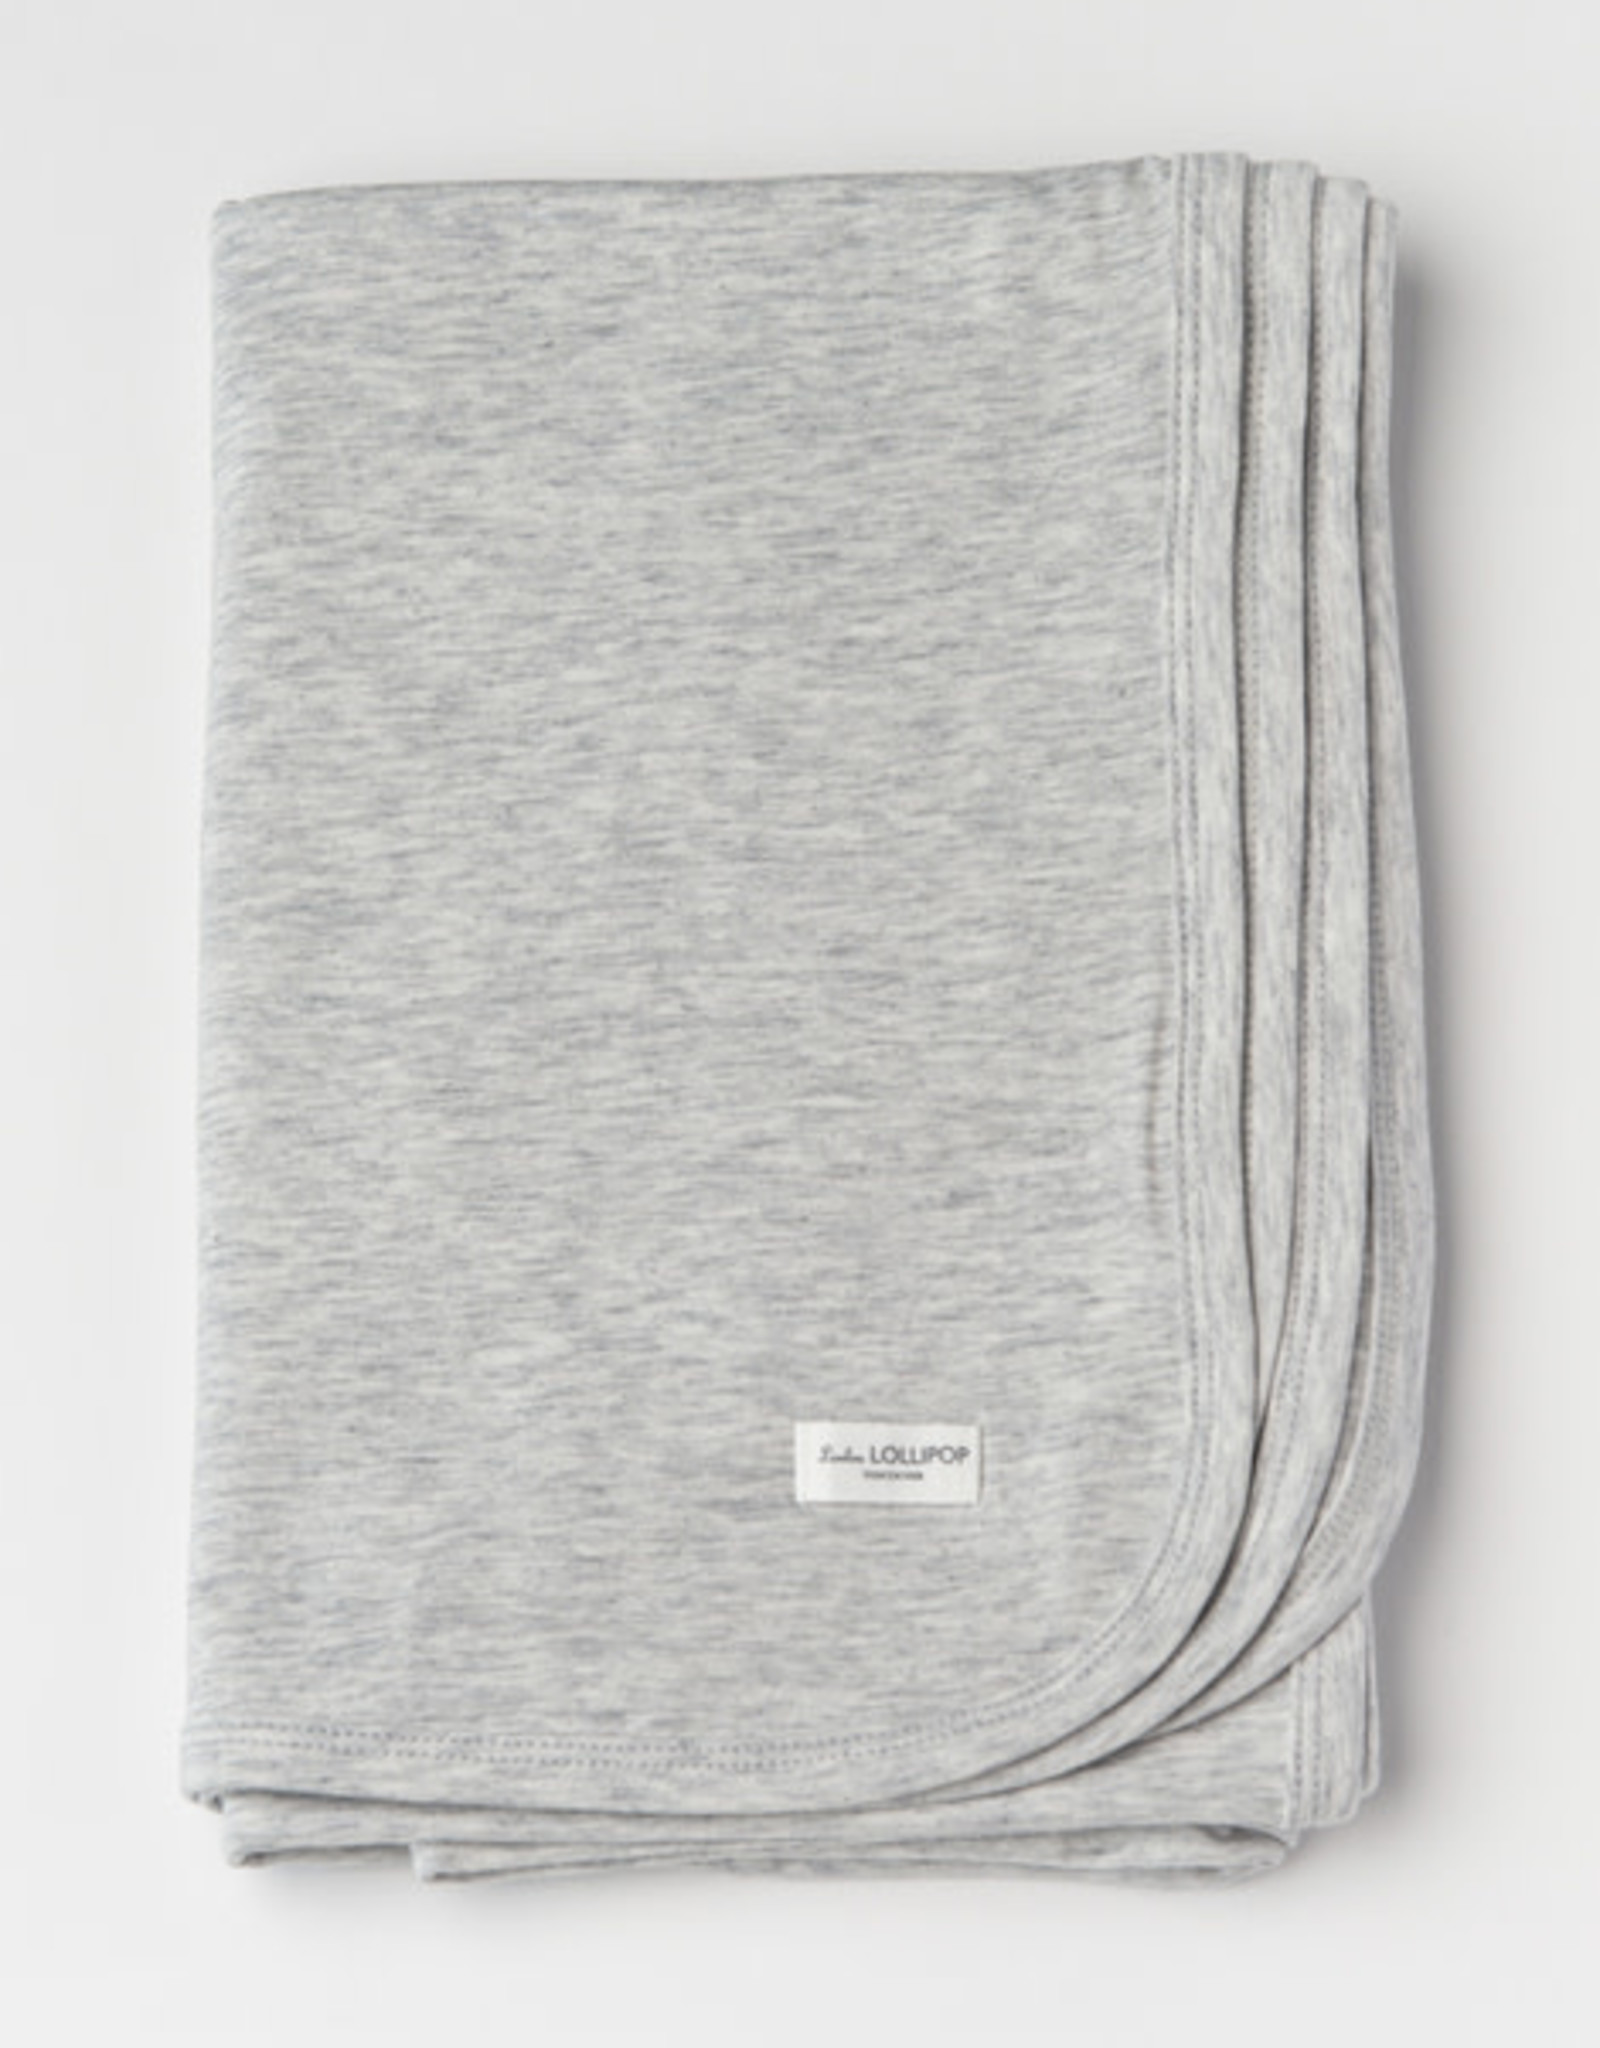 Stretch Knit Blanket in TENCEL - Heather Grey